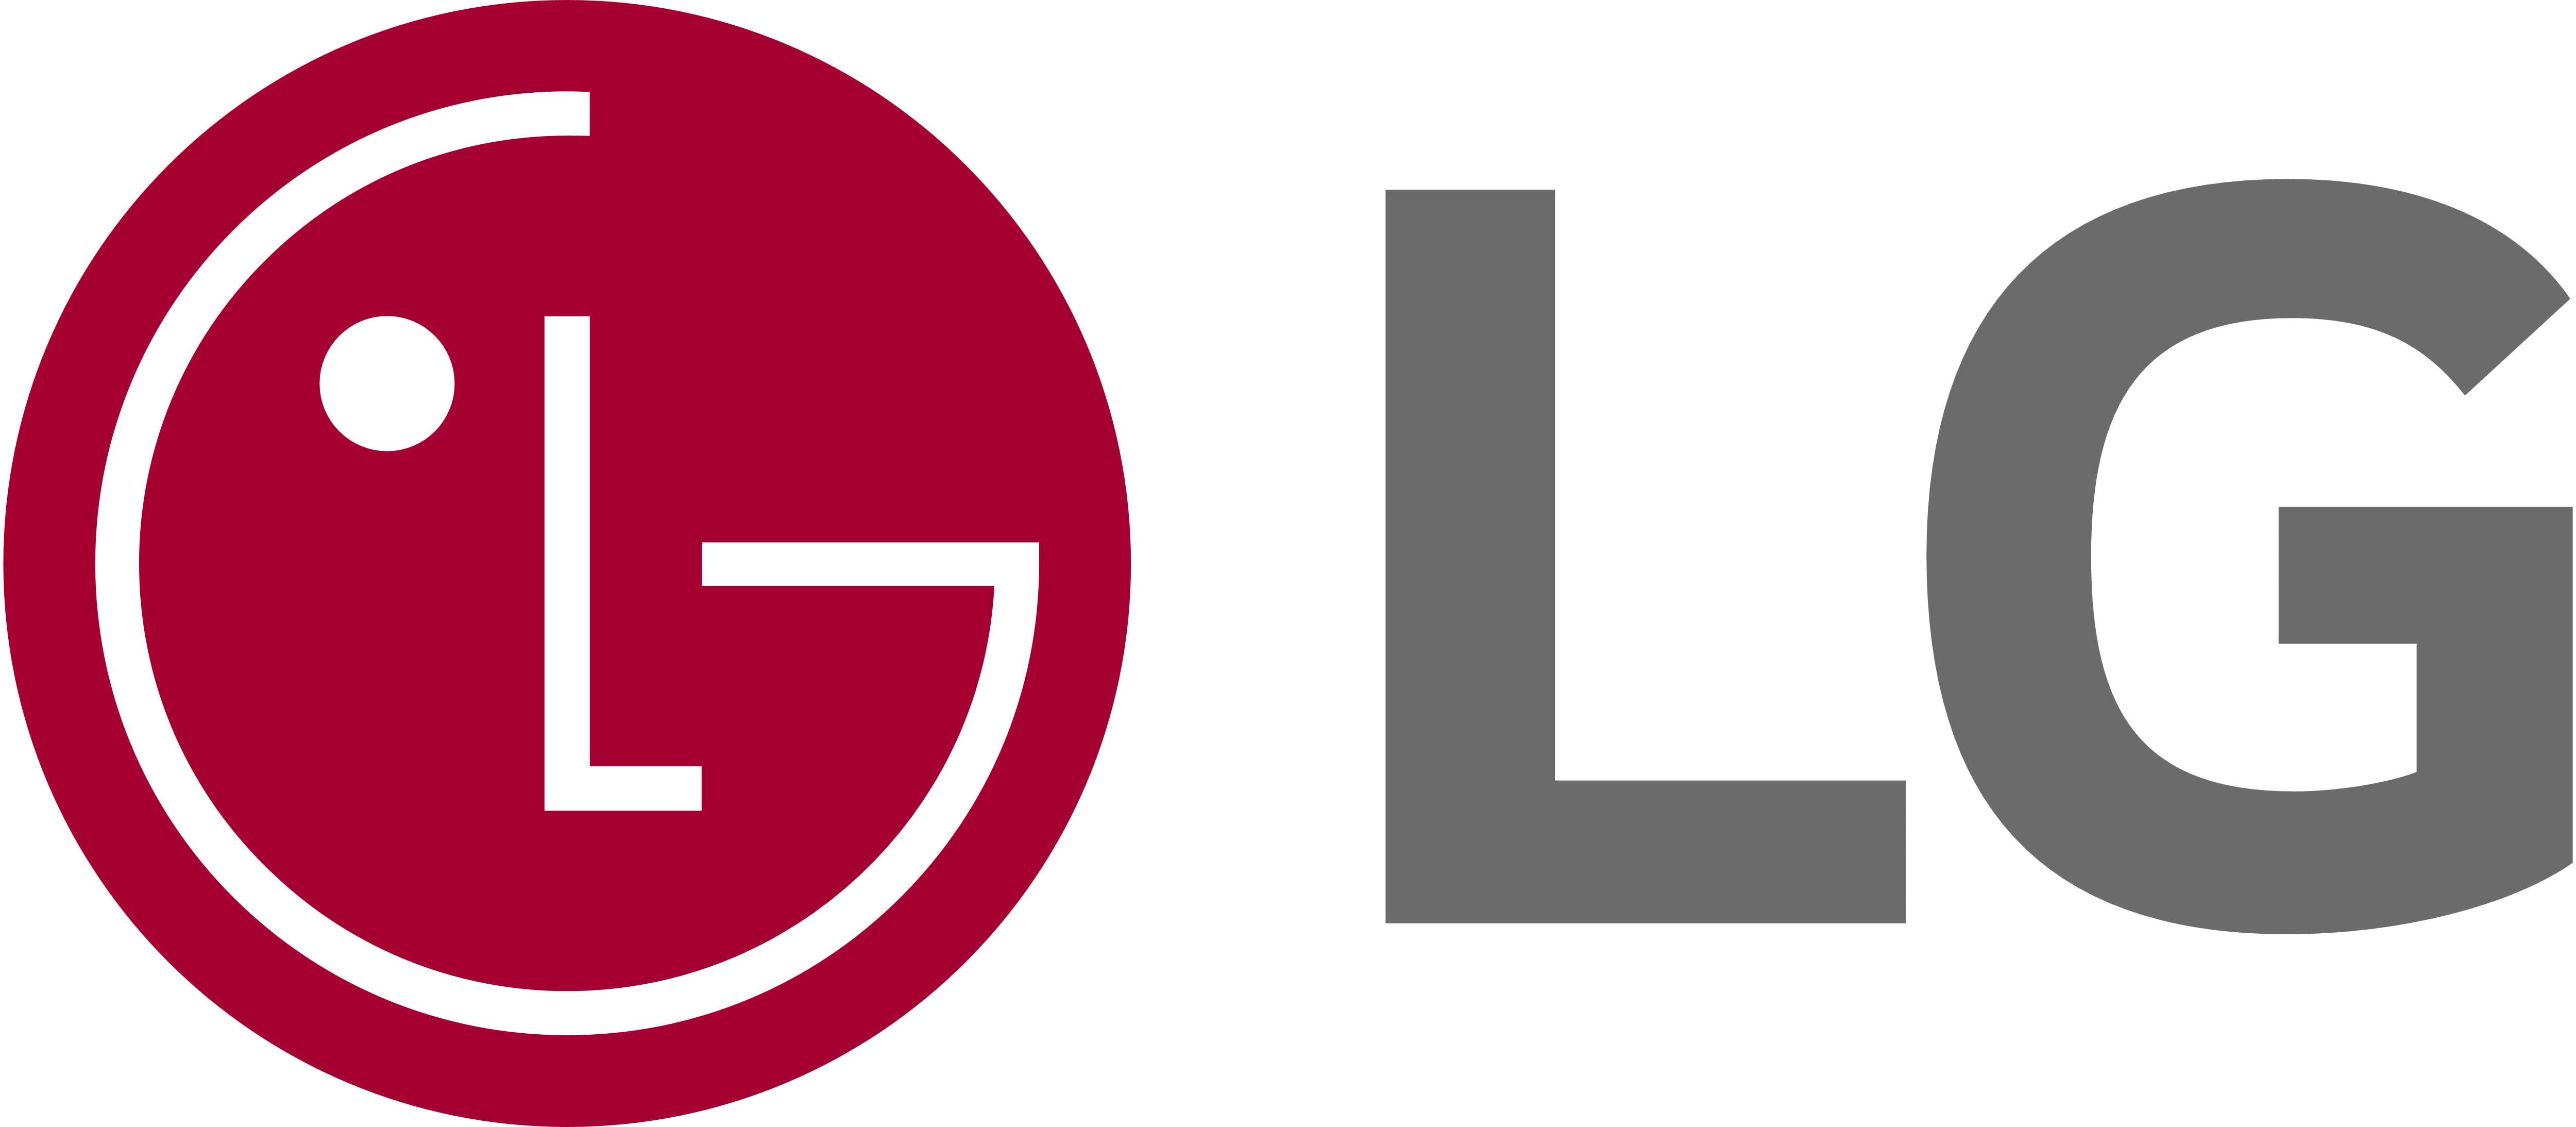 LG Home Dryer Repair, Maytag Dryer Service